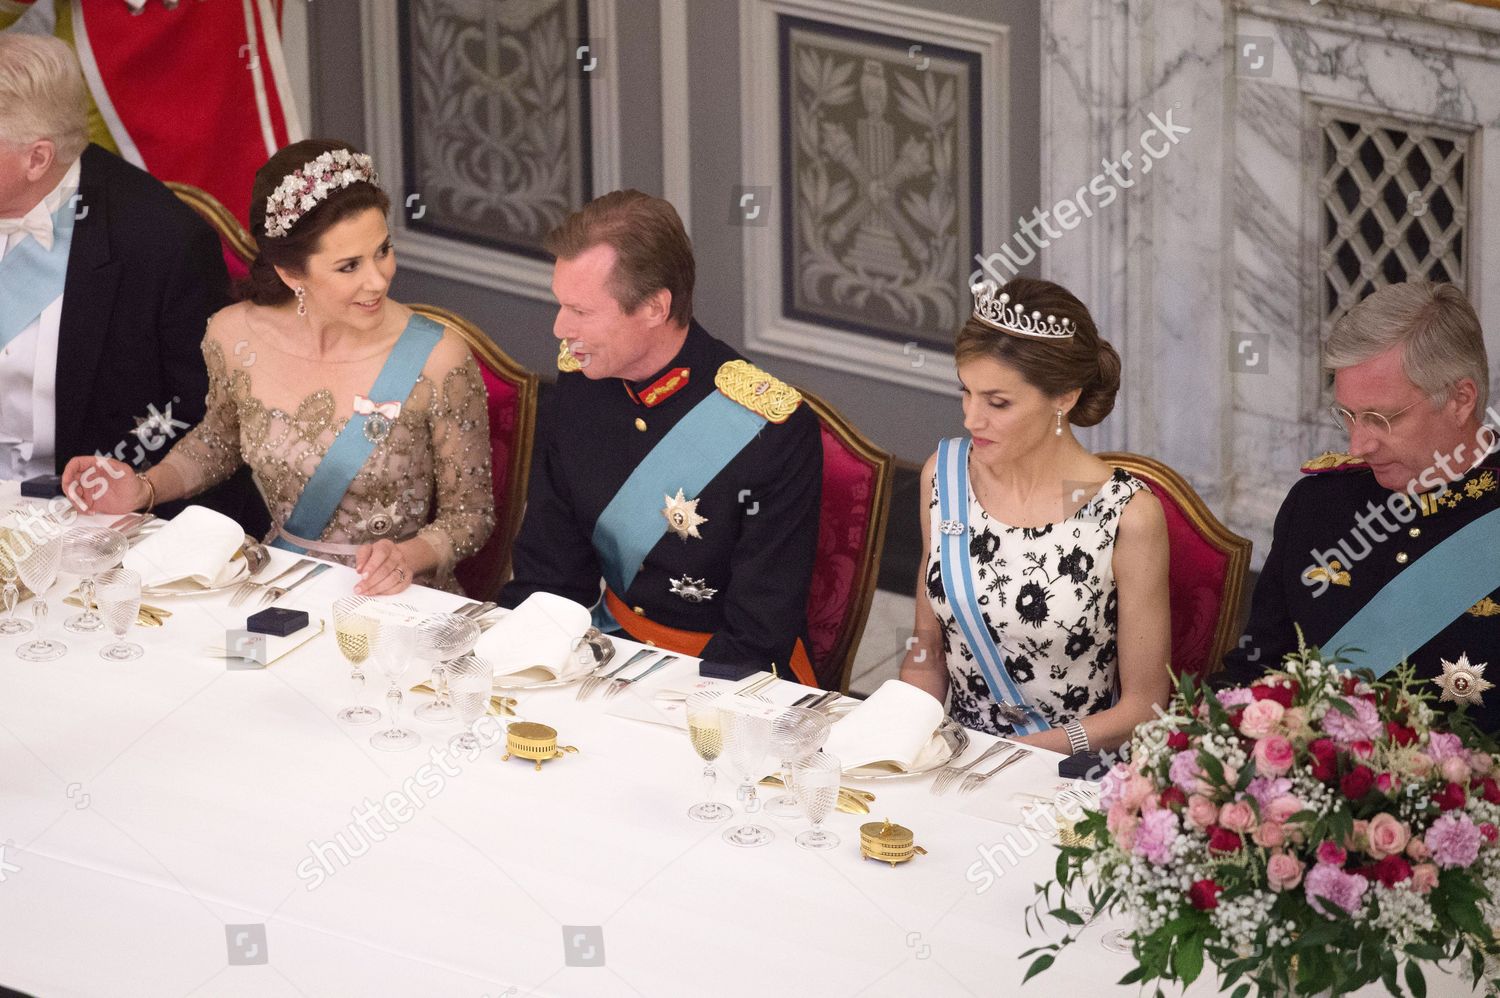 queen-margrethe-ii-75th-birthday-dinner-christiansborg-palace-copenhagen-denmark-shutterstock-editorial-4666673an.jpg